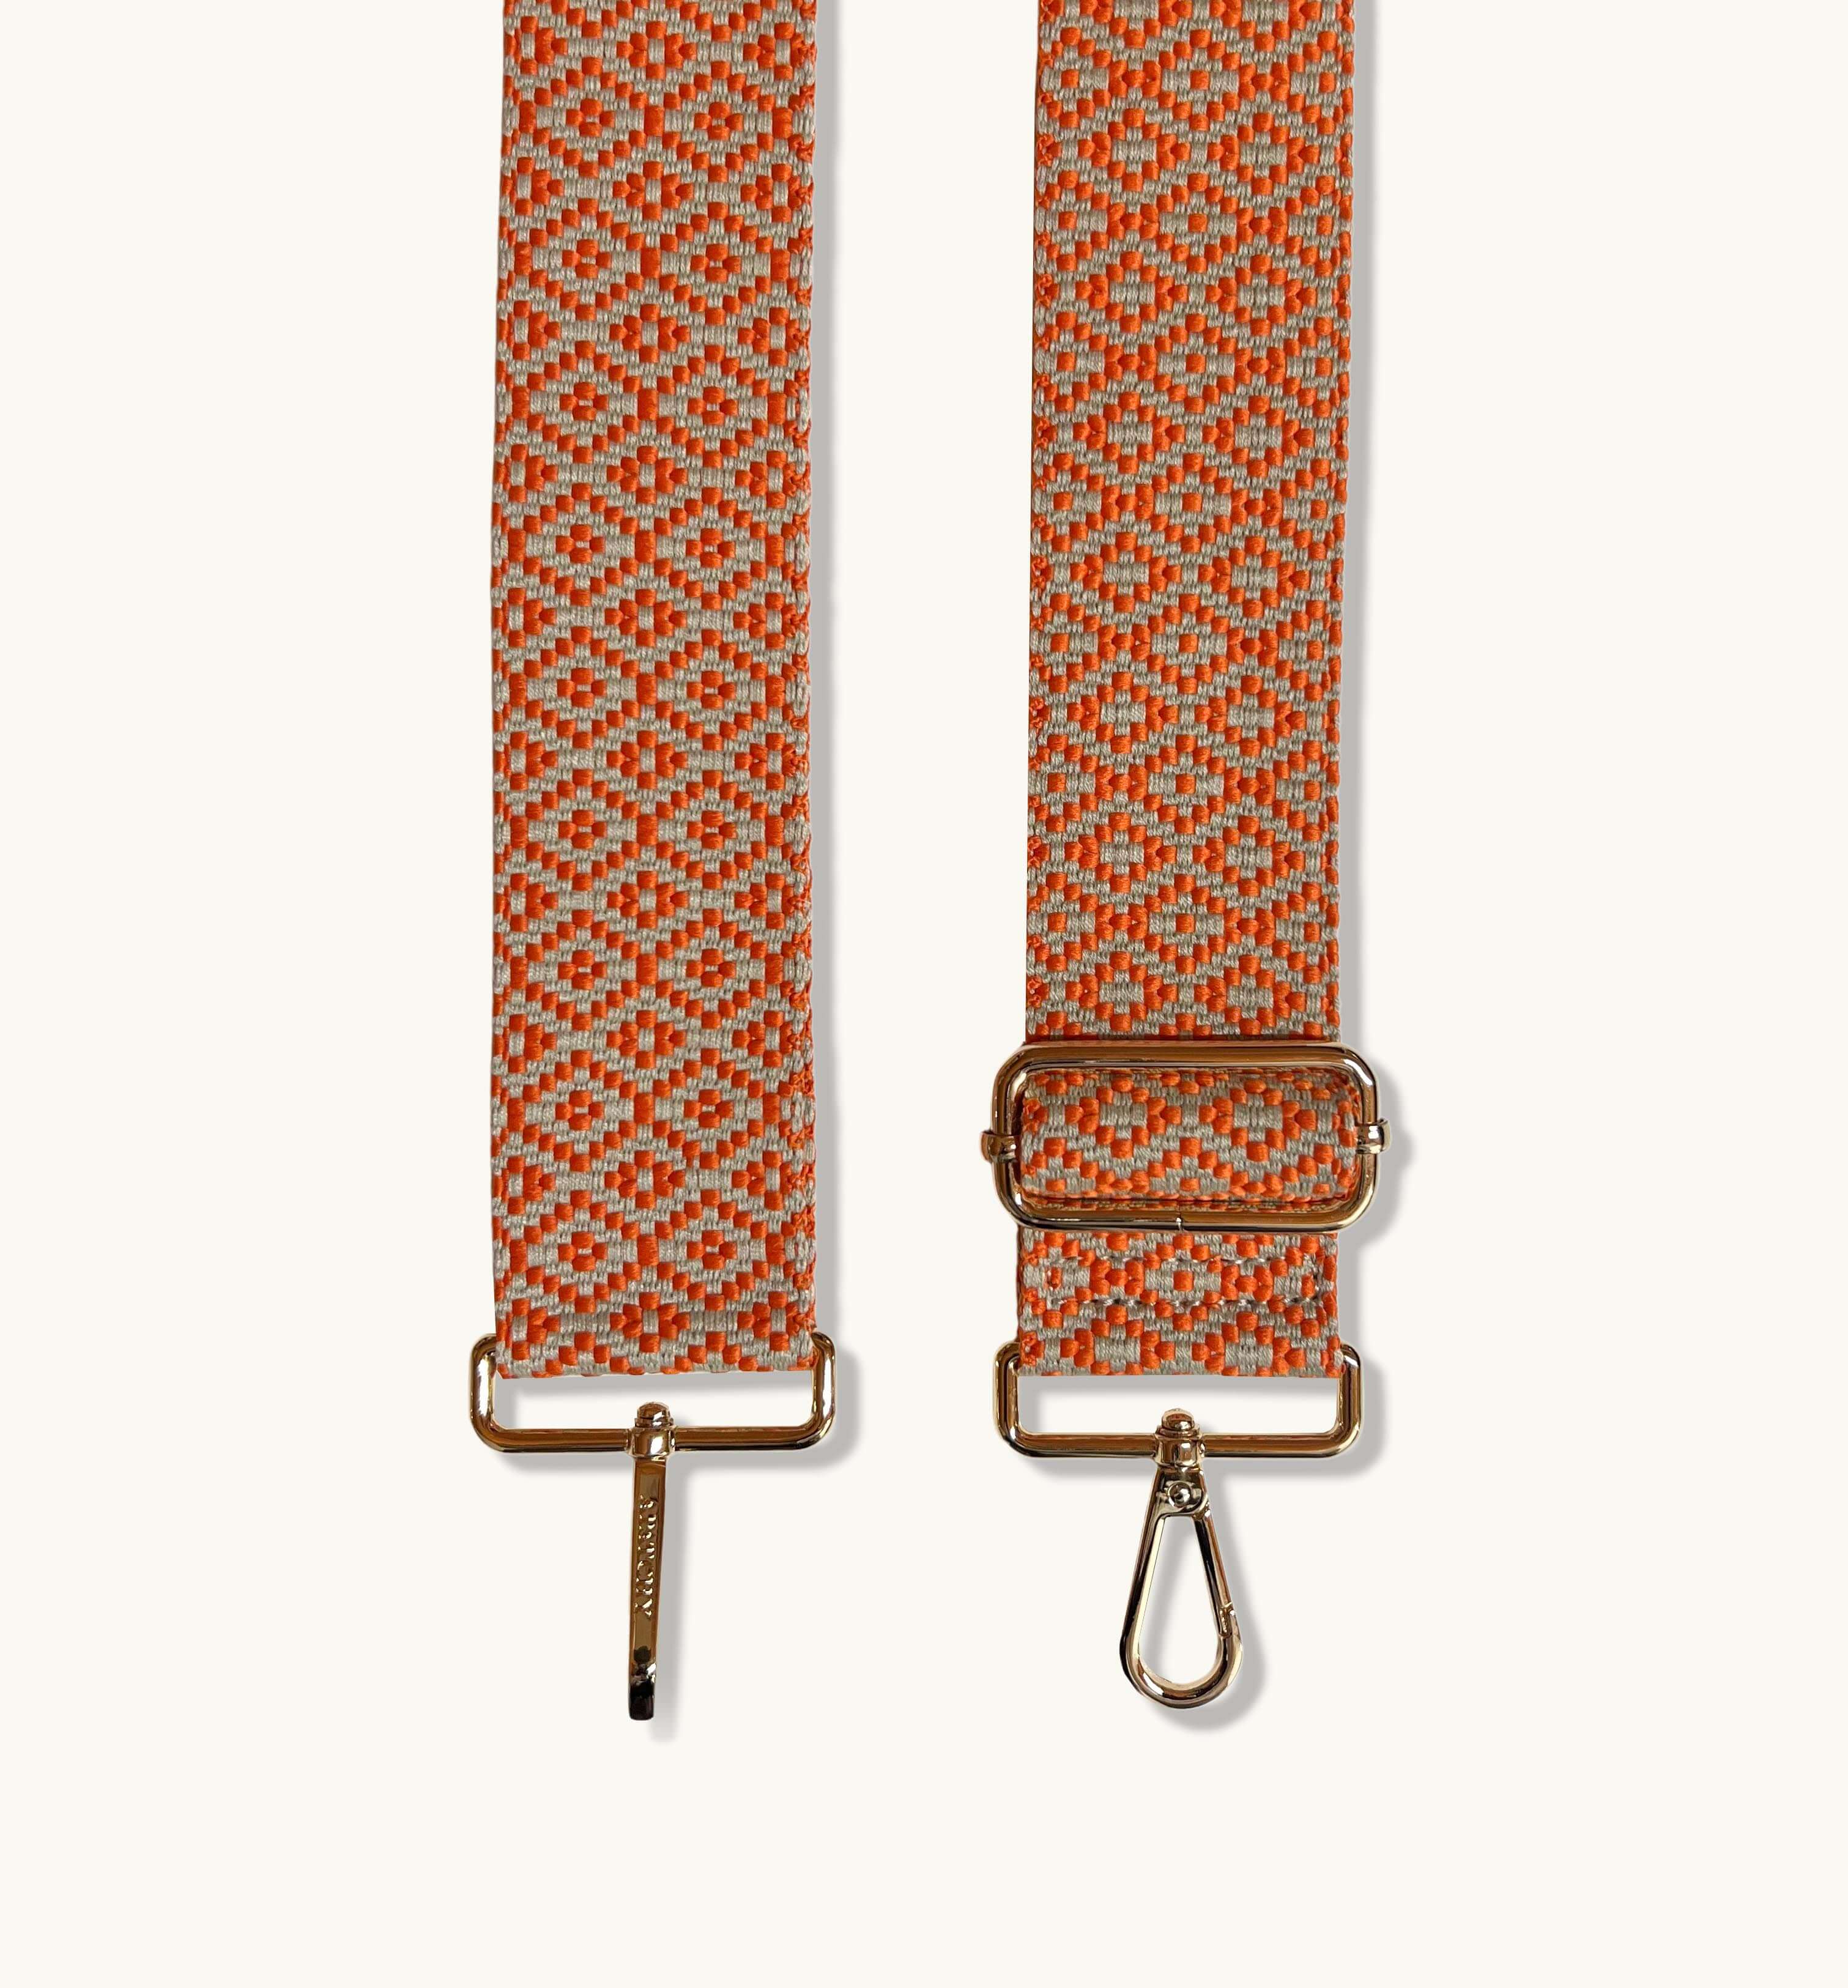 Light Grey Leather Crossbody Bag With Orange Cross-Stitch Strap